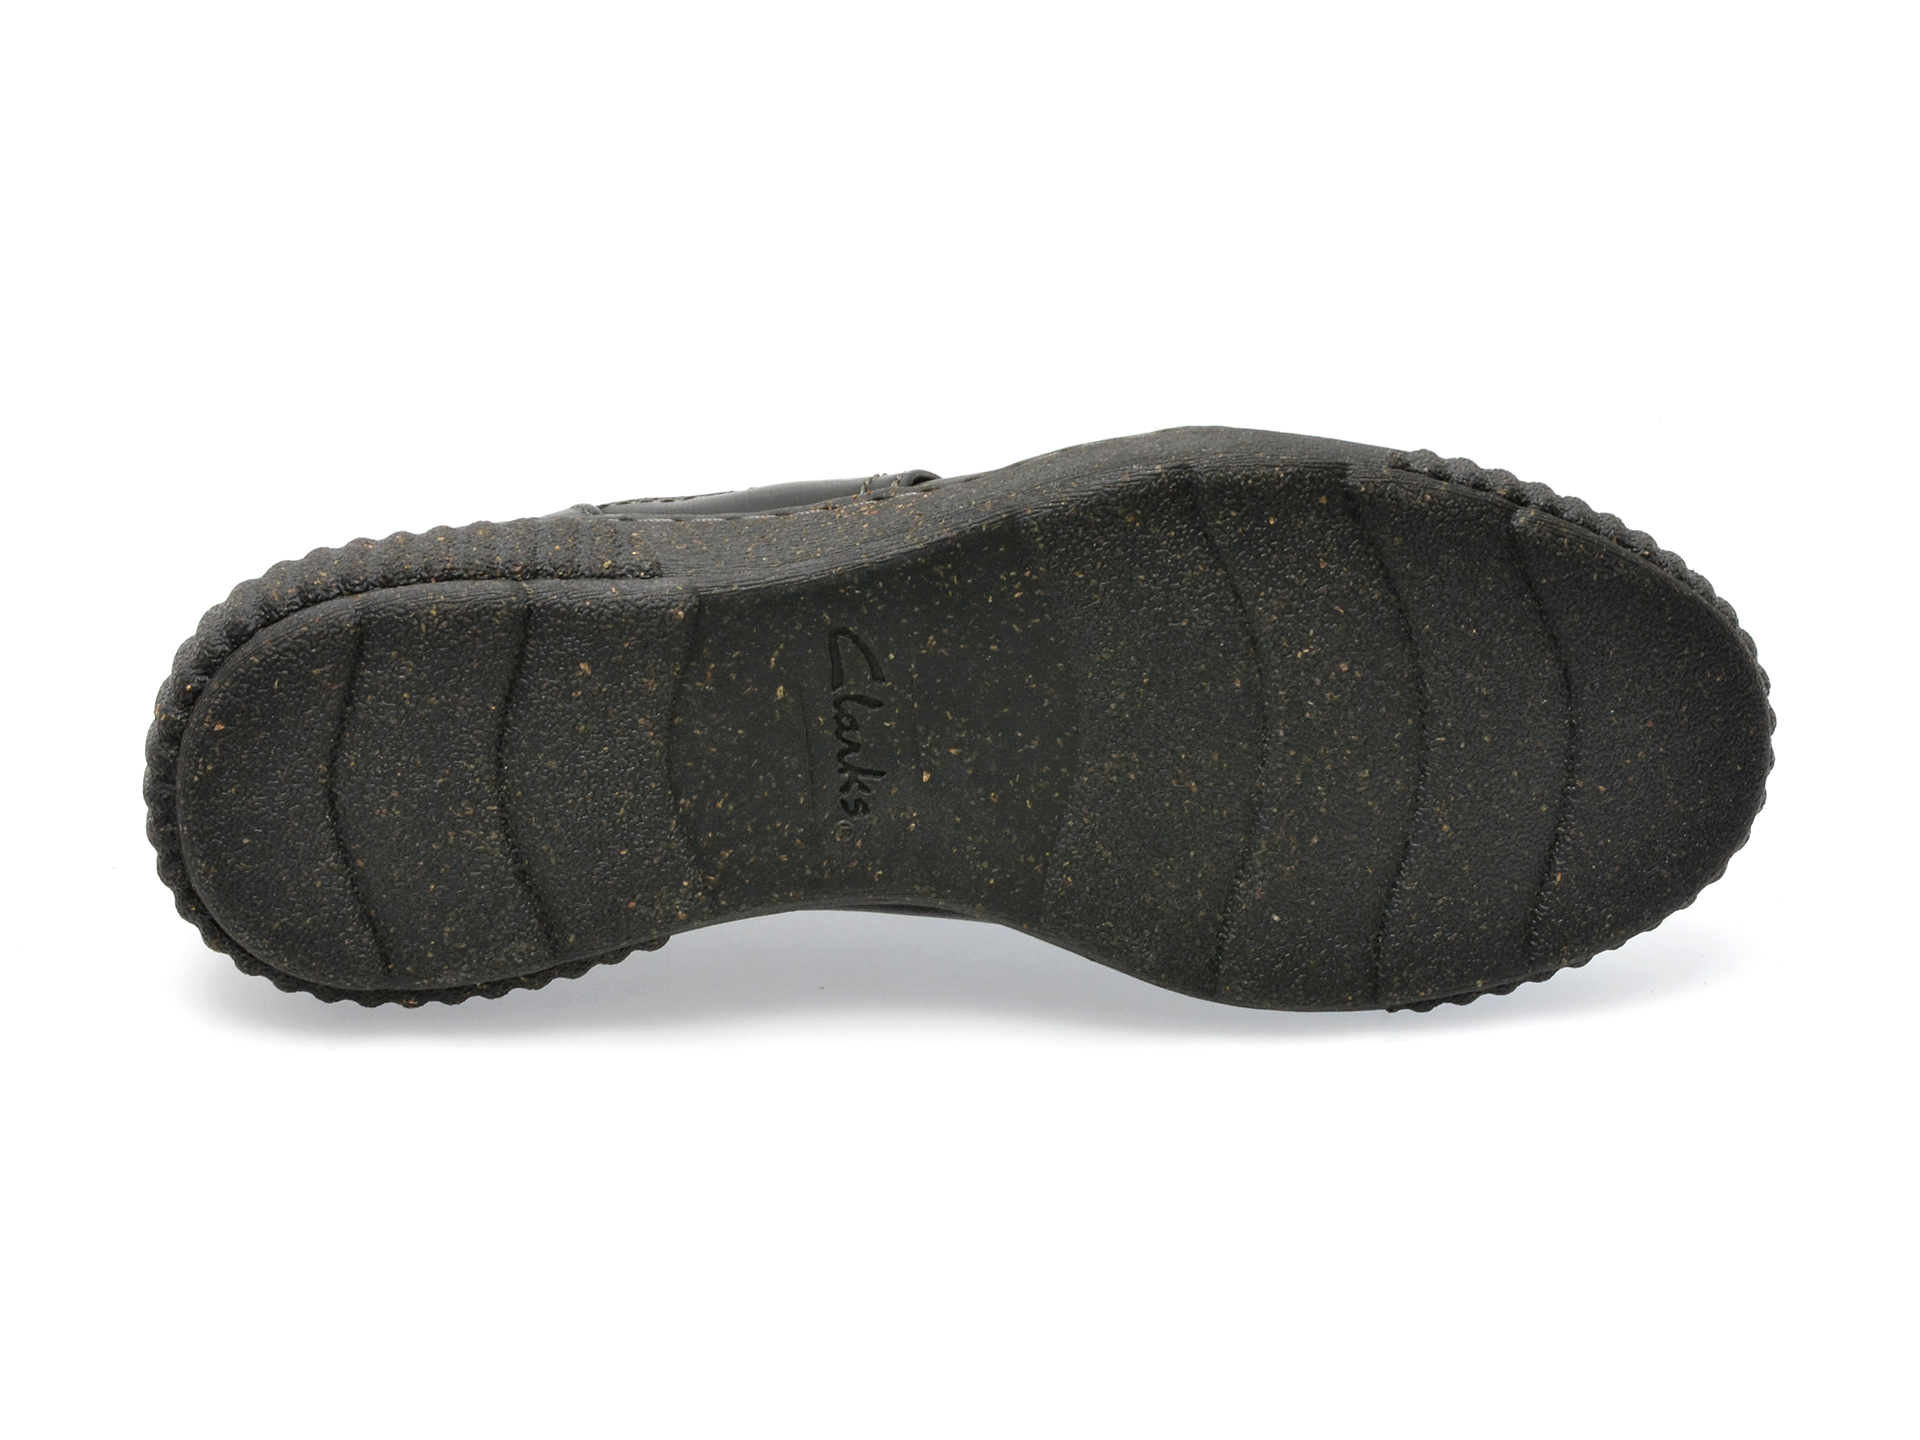 Pantofi CLARKS negri, CAROPEA, din piele naturala